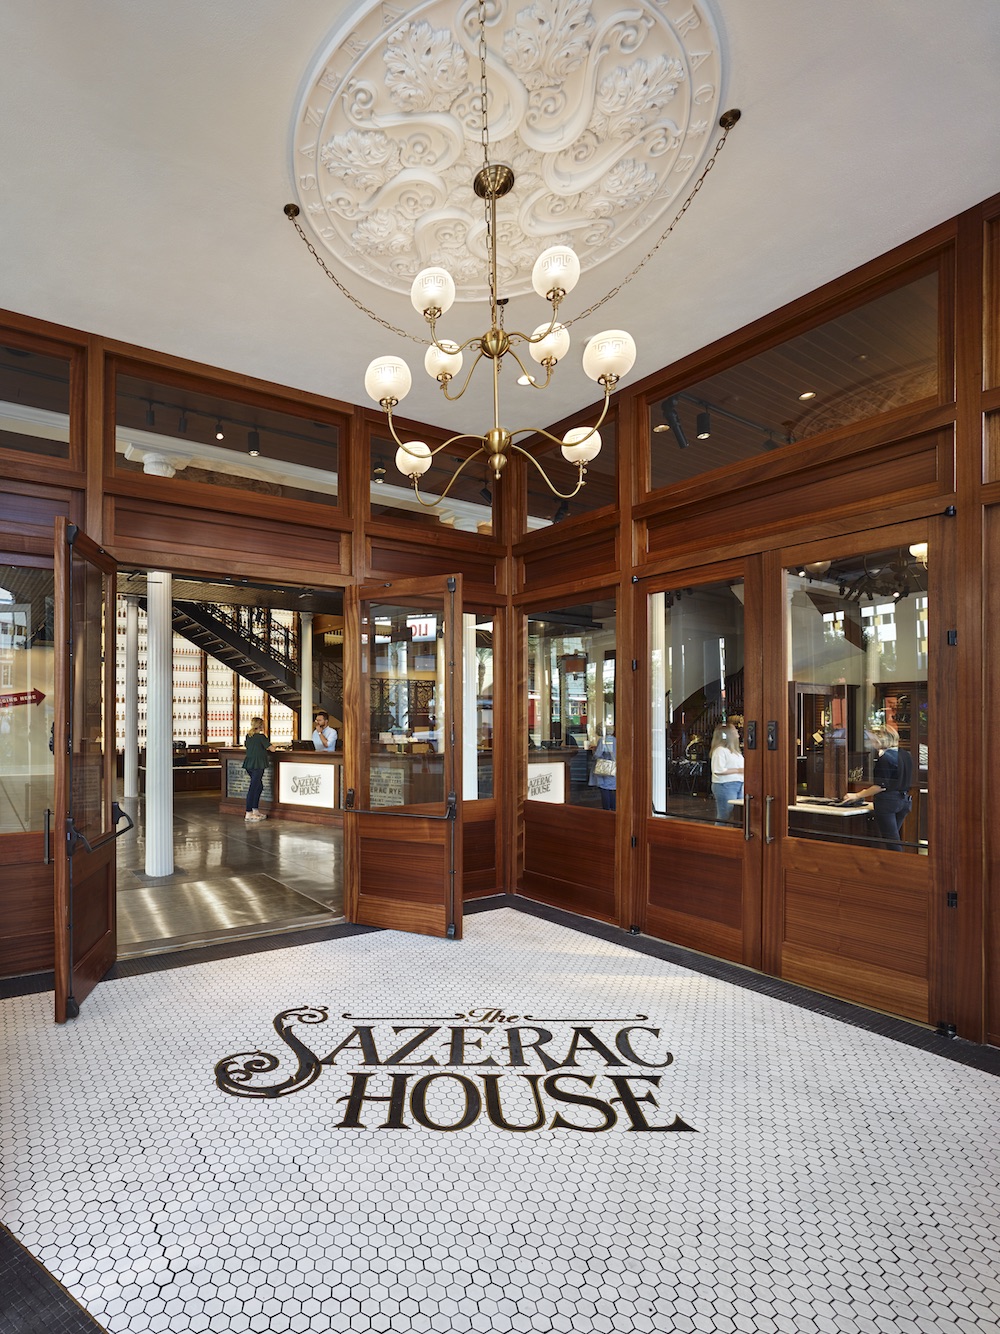 Sazerac House Homeplace - The Sazerac House Entry